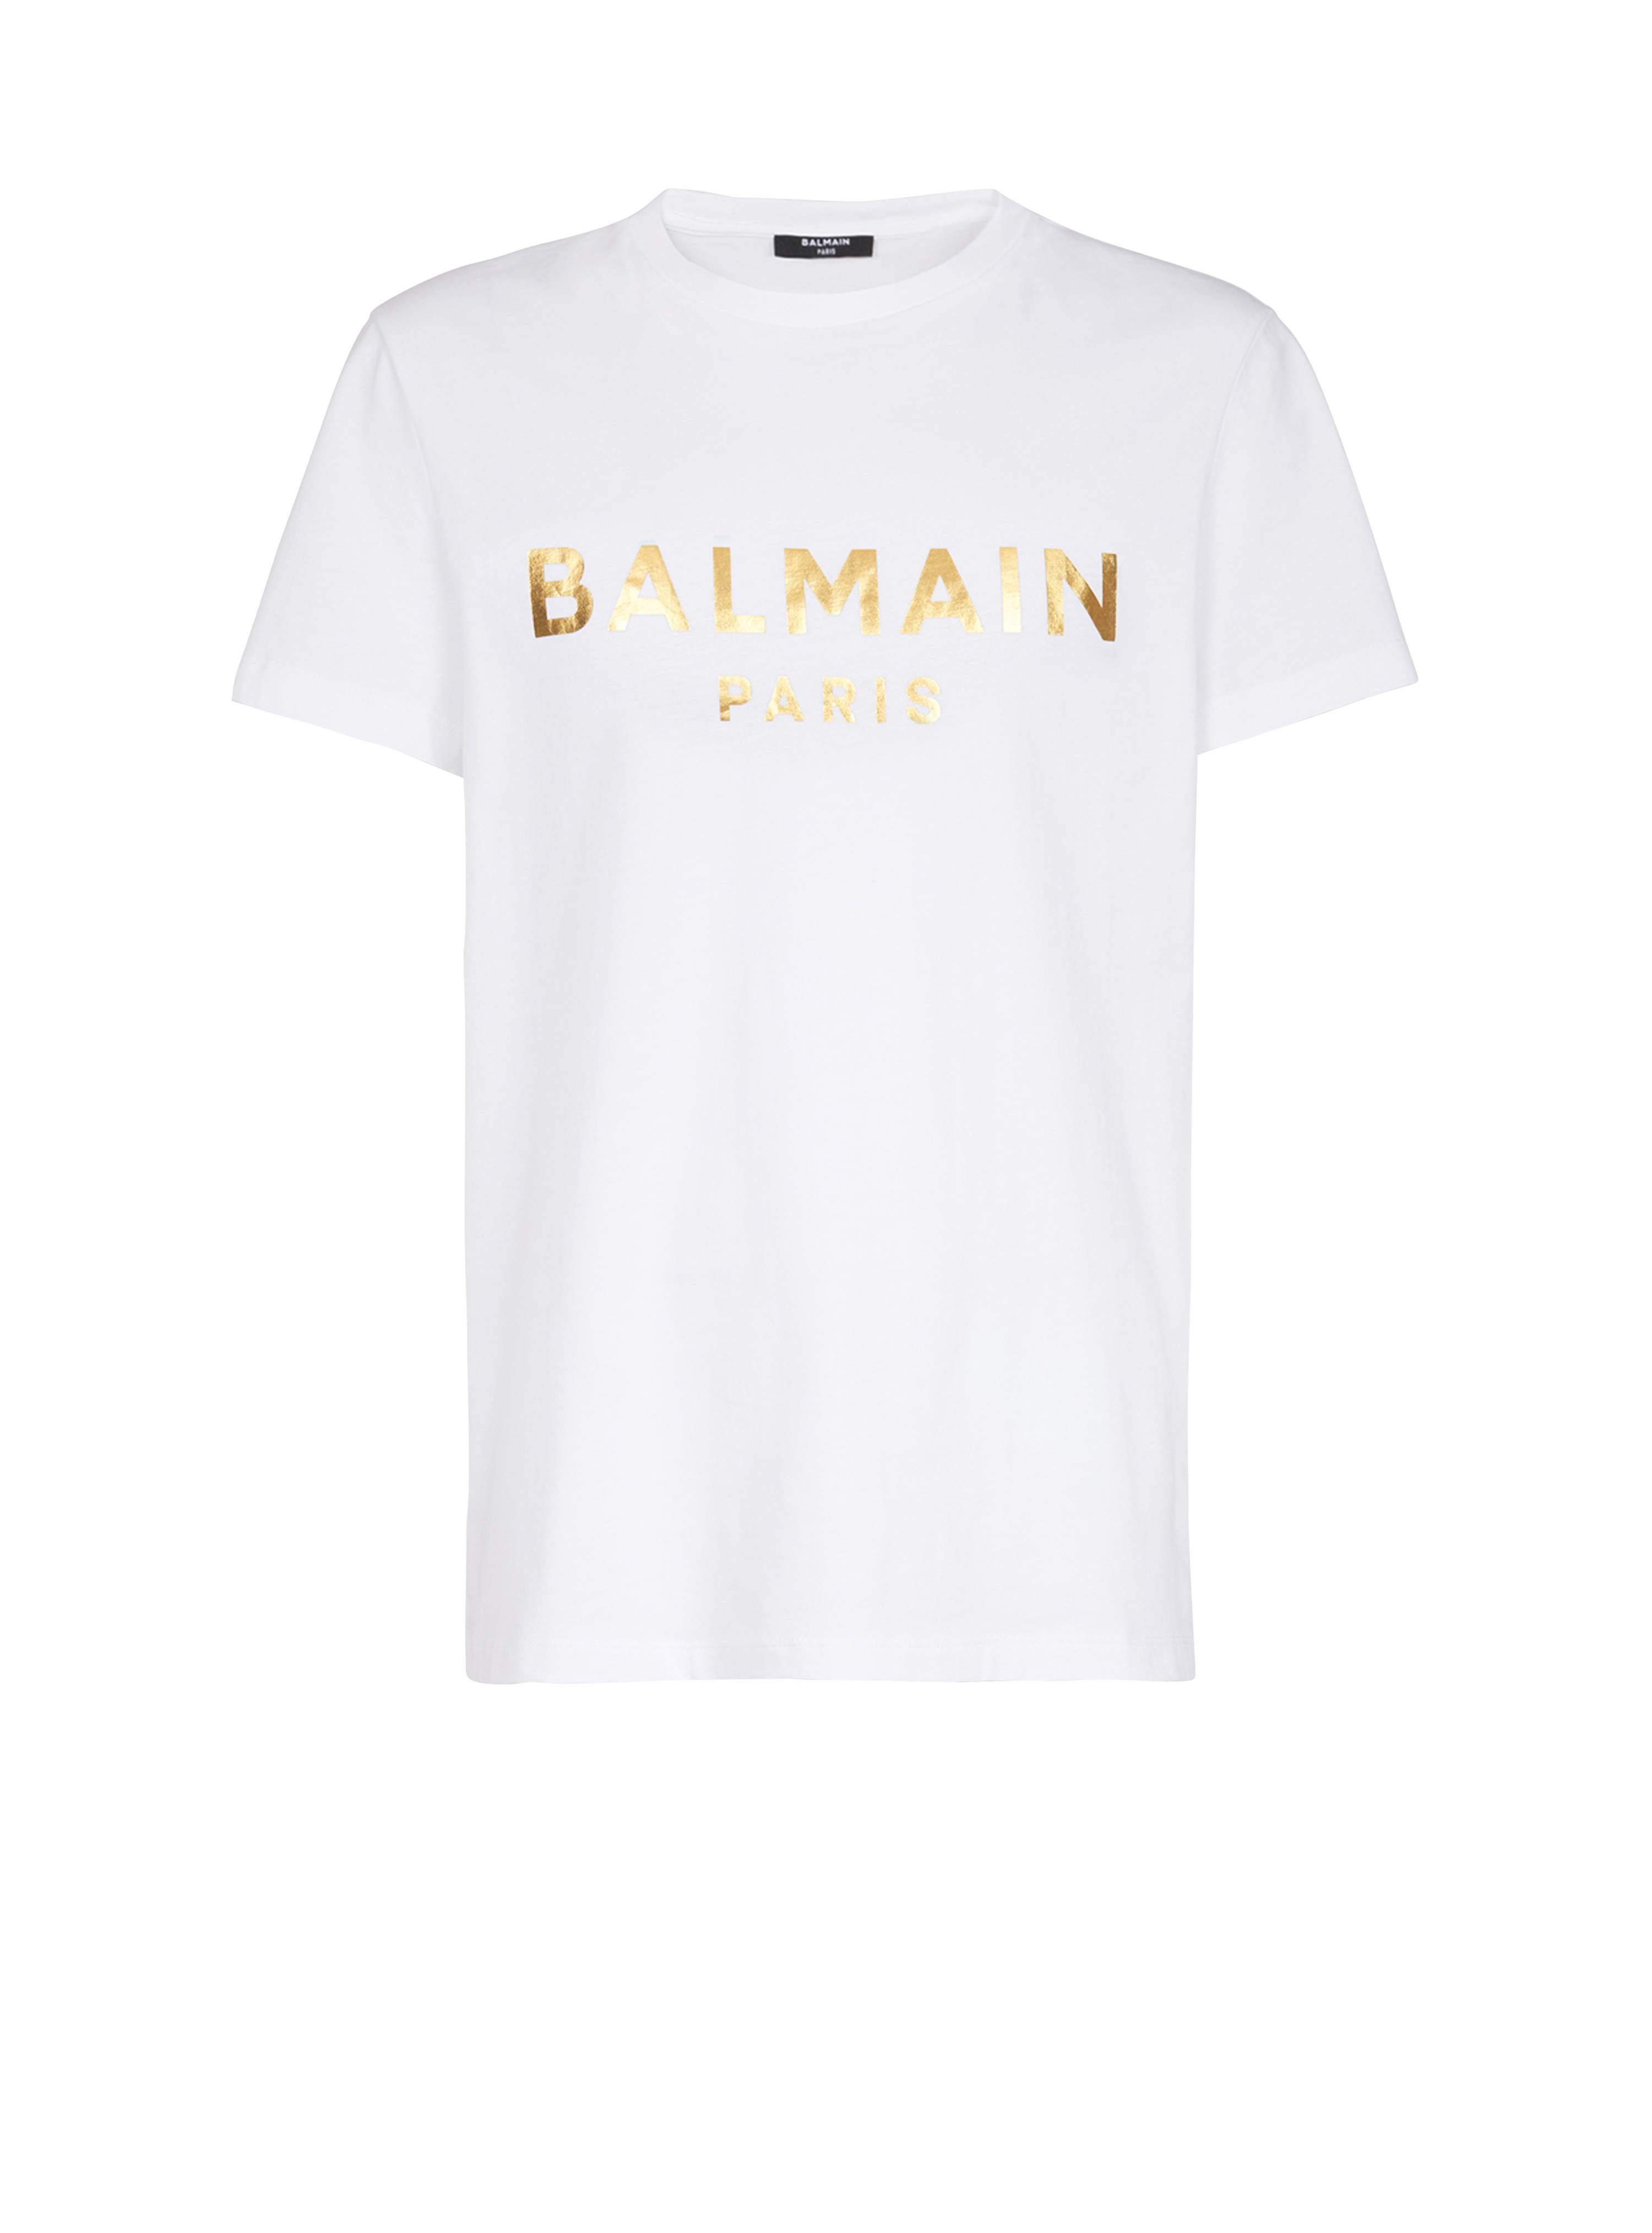 Eco-designed cotton T-shirt with Balmain Paris logo print, white